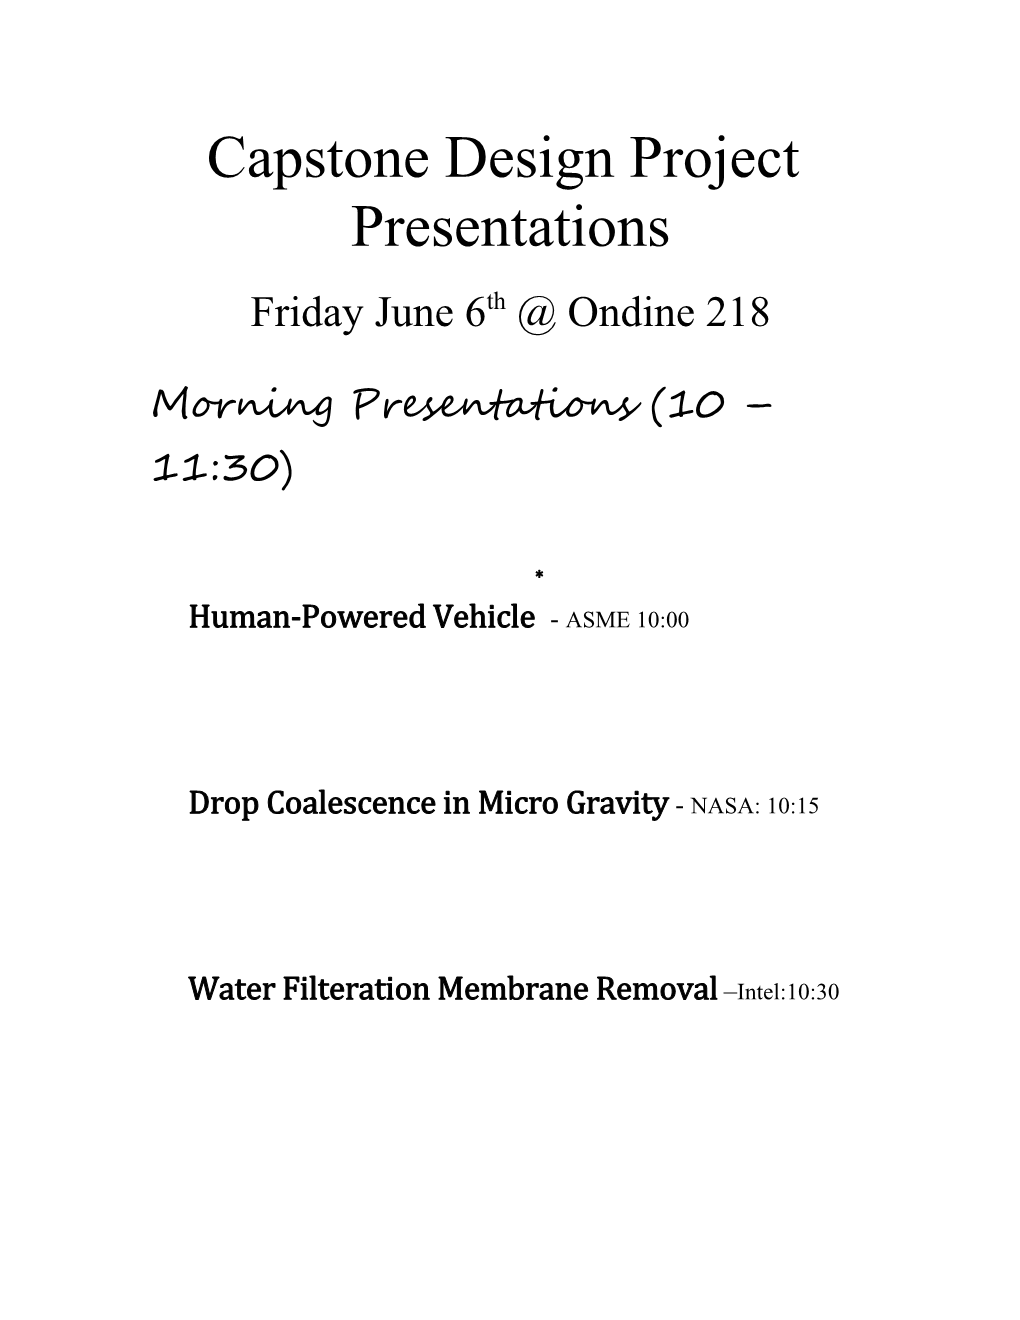 Capstone Design Project Presentations